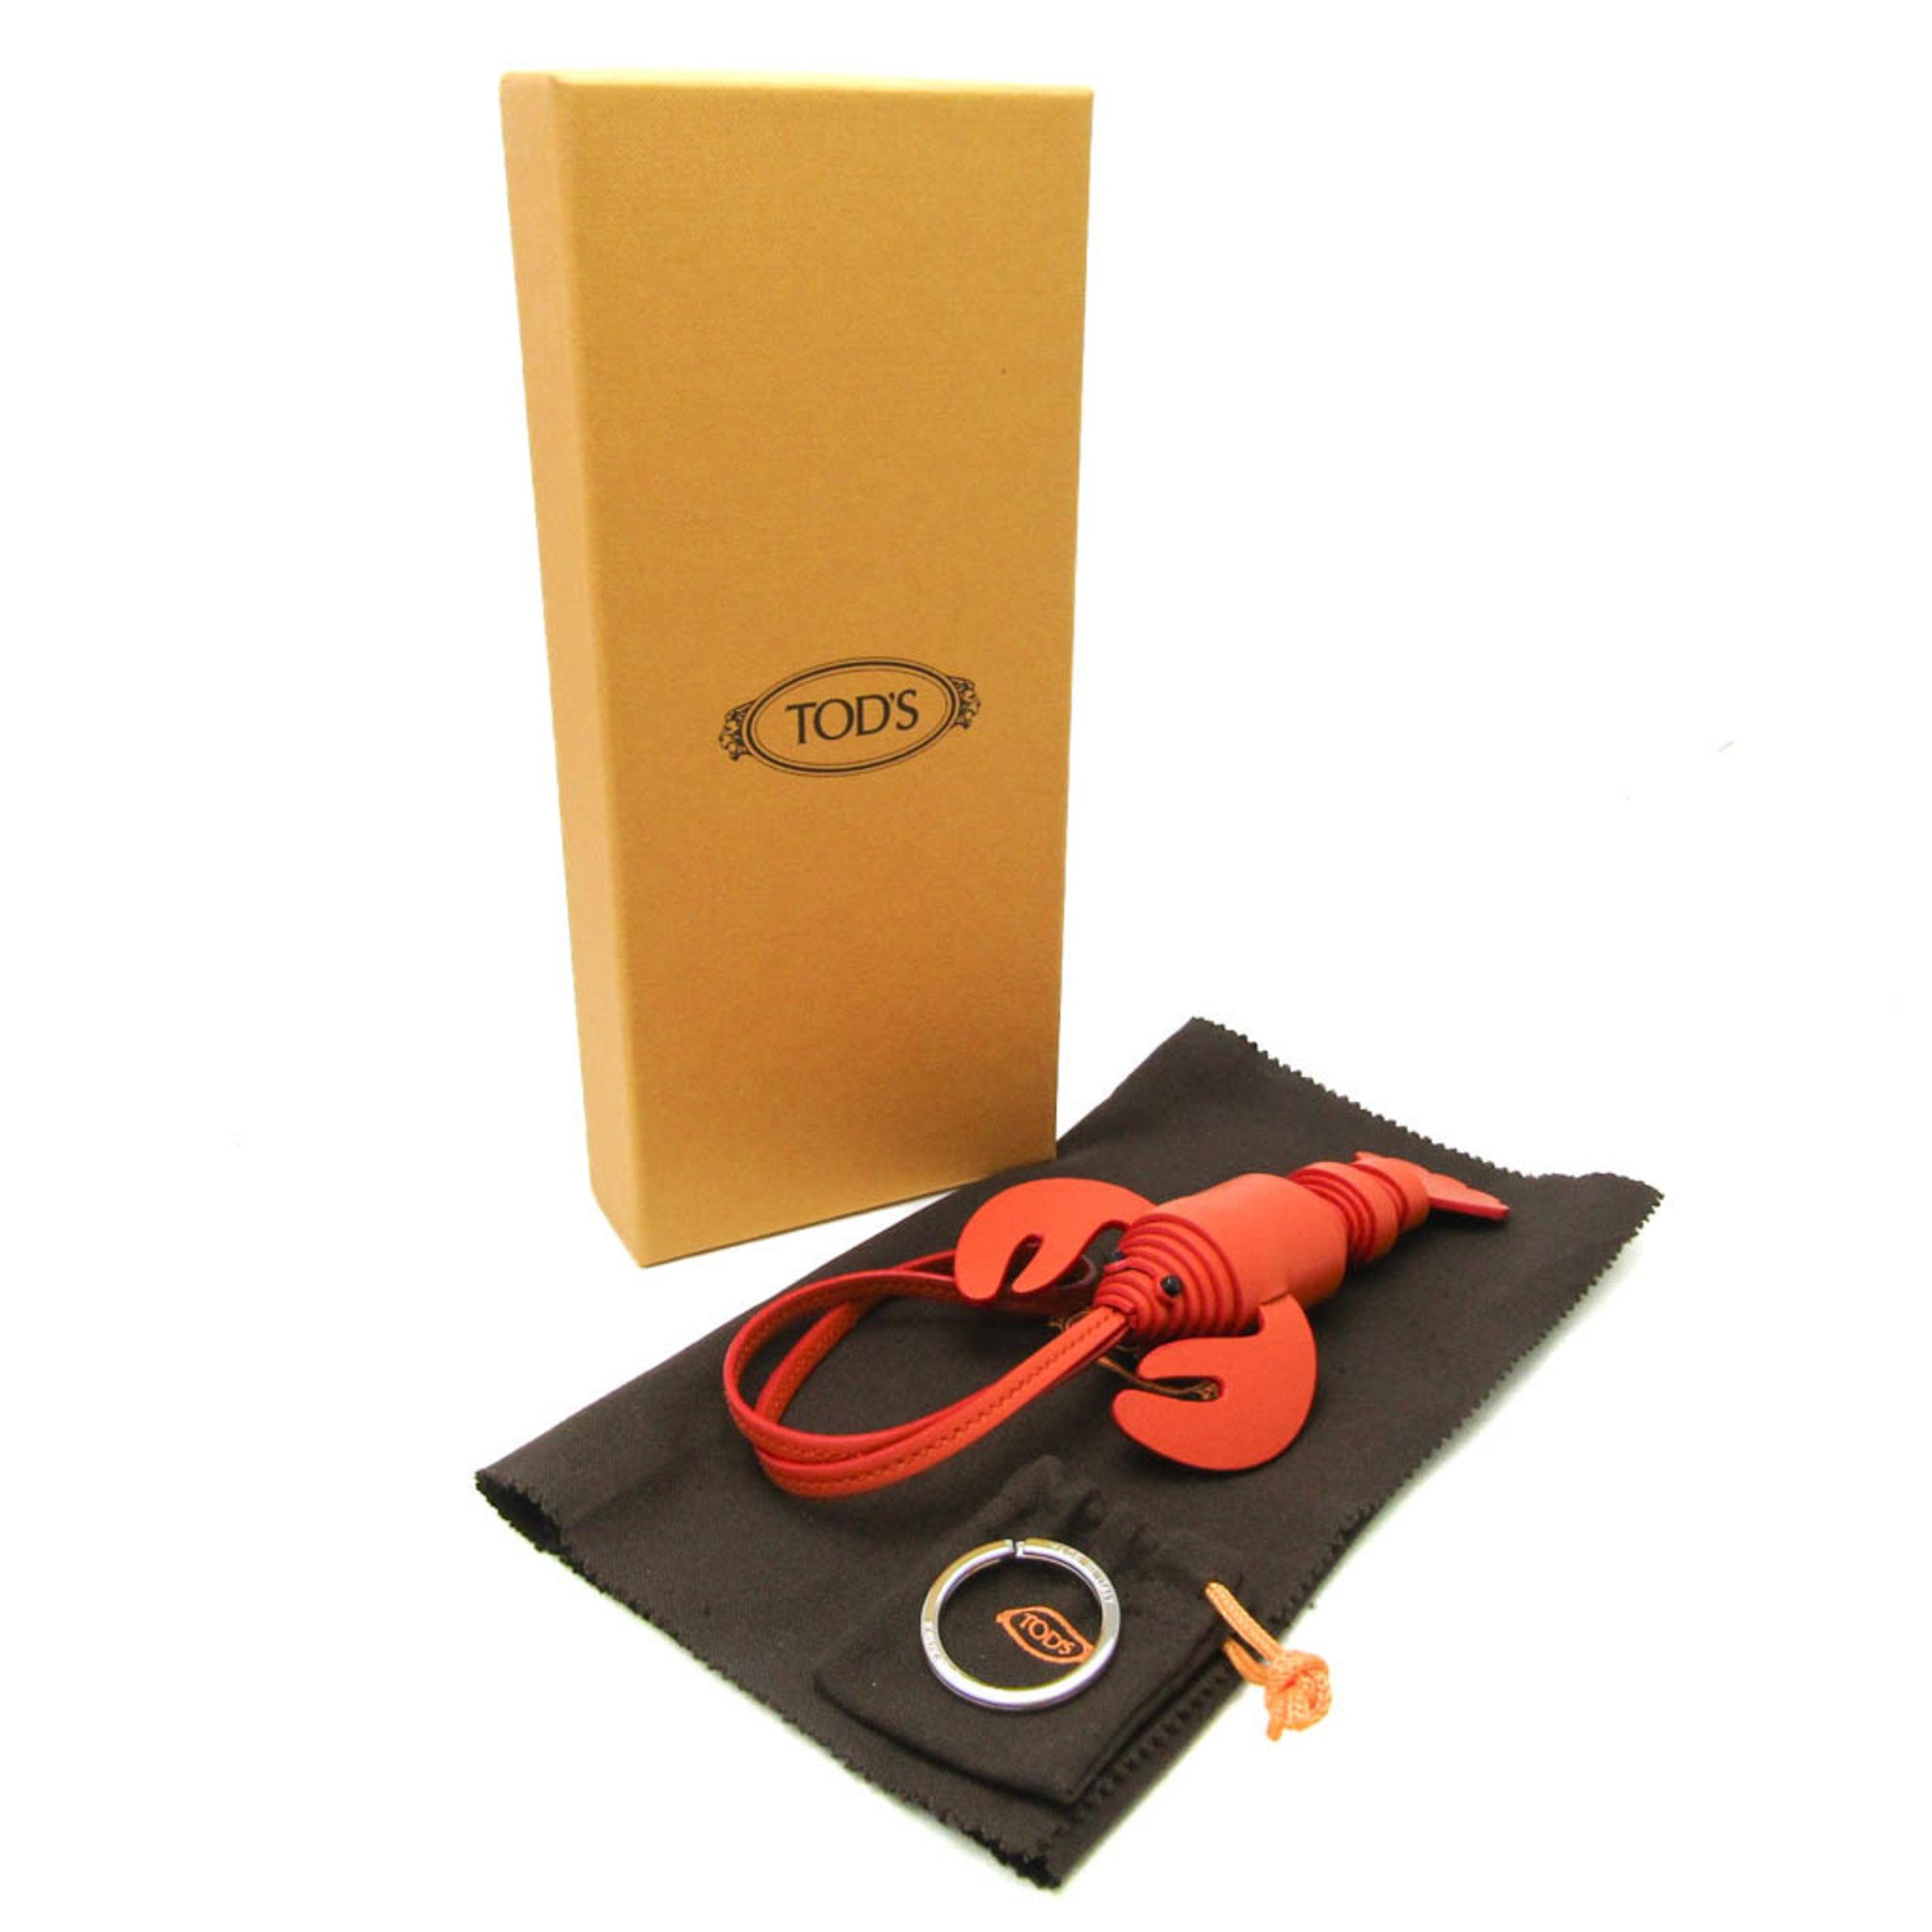 Tod's Leather,Metal Handbag Charm Orange,Red Color,Silver LOBSTER KEY RING